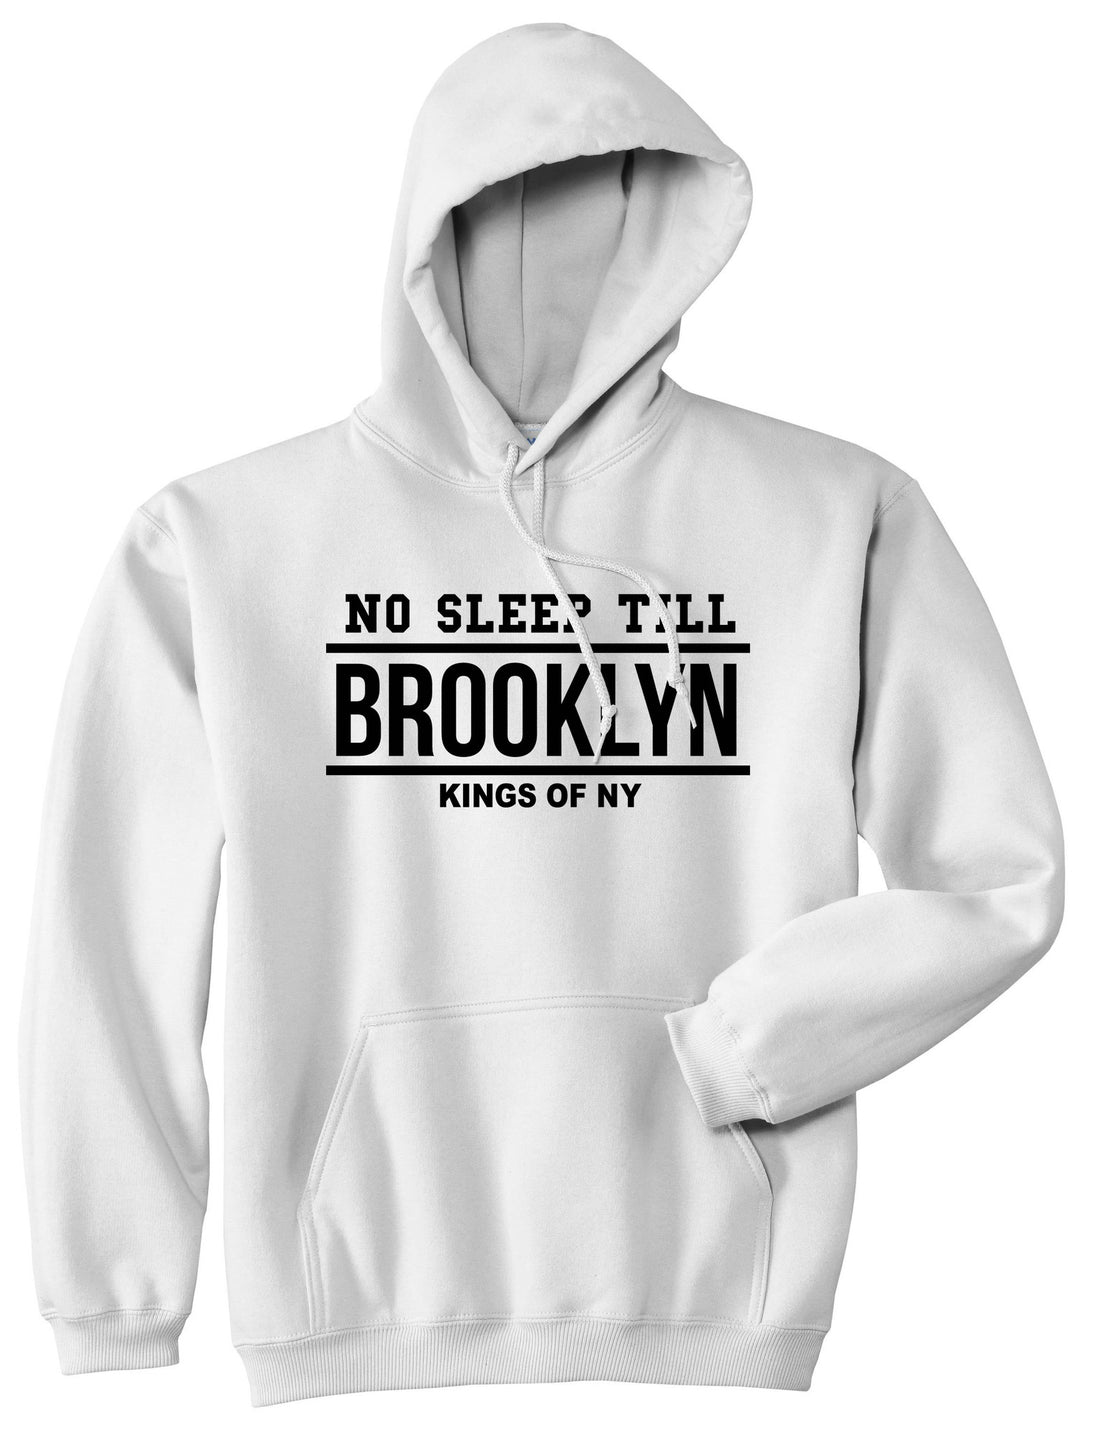 No Sleep Till Brooklyn Pullover Hoodie Hoody in White by Kings Of NY